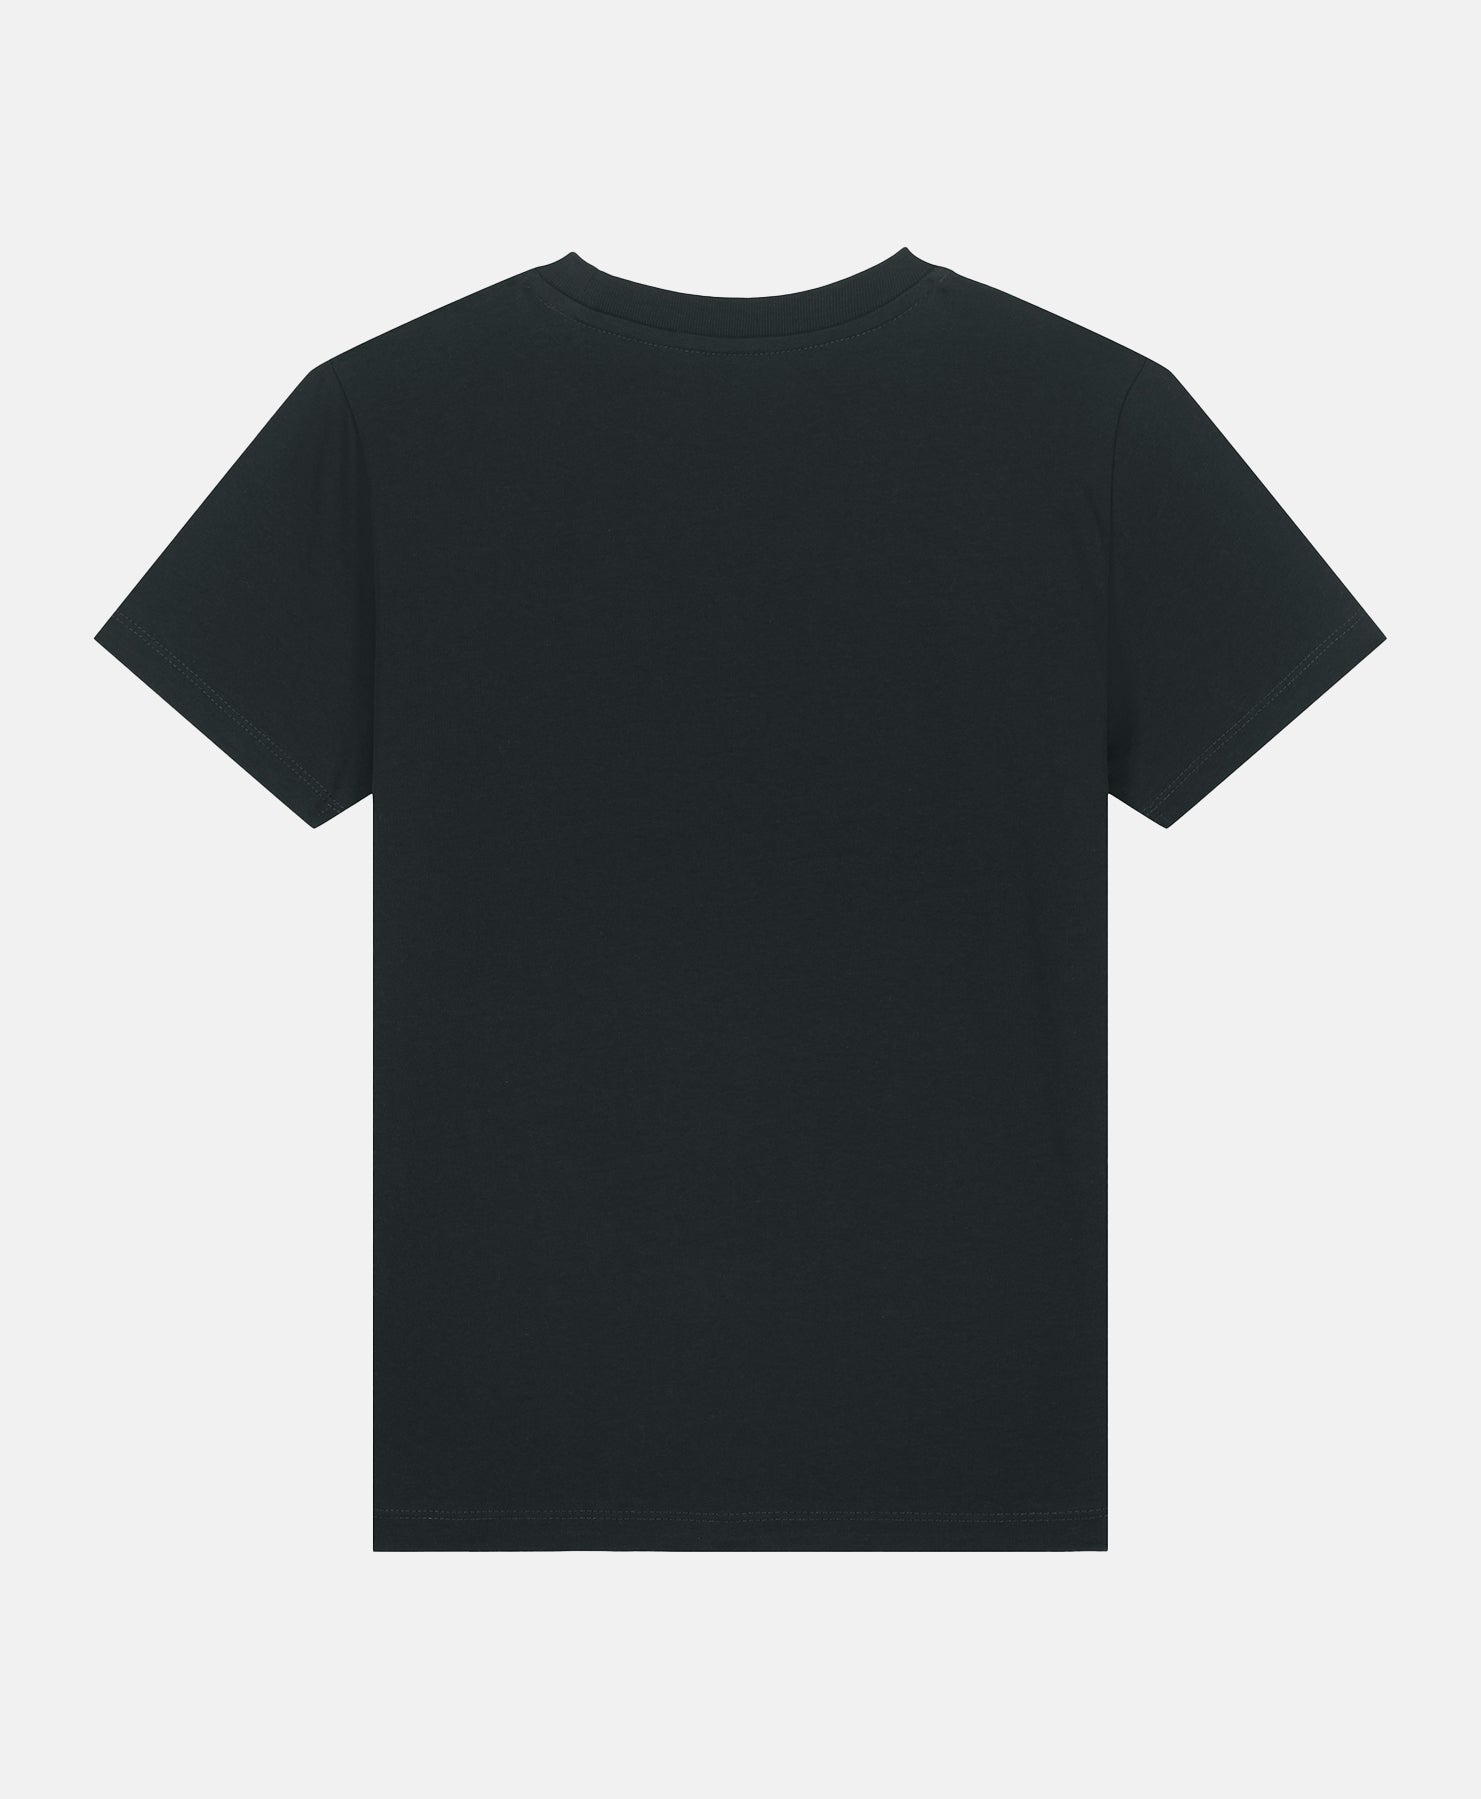 Doberman T-Shirt Kids Black